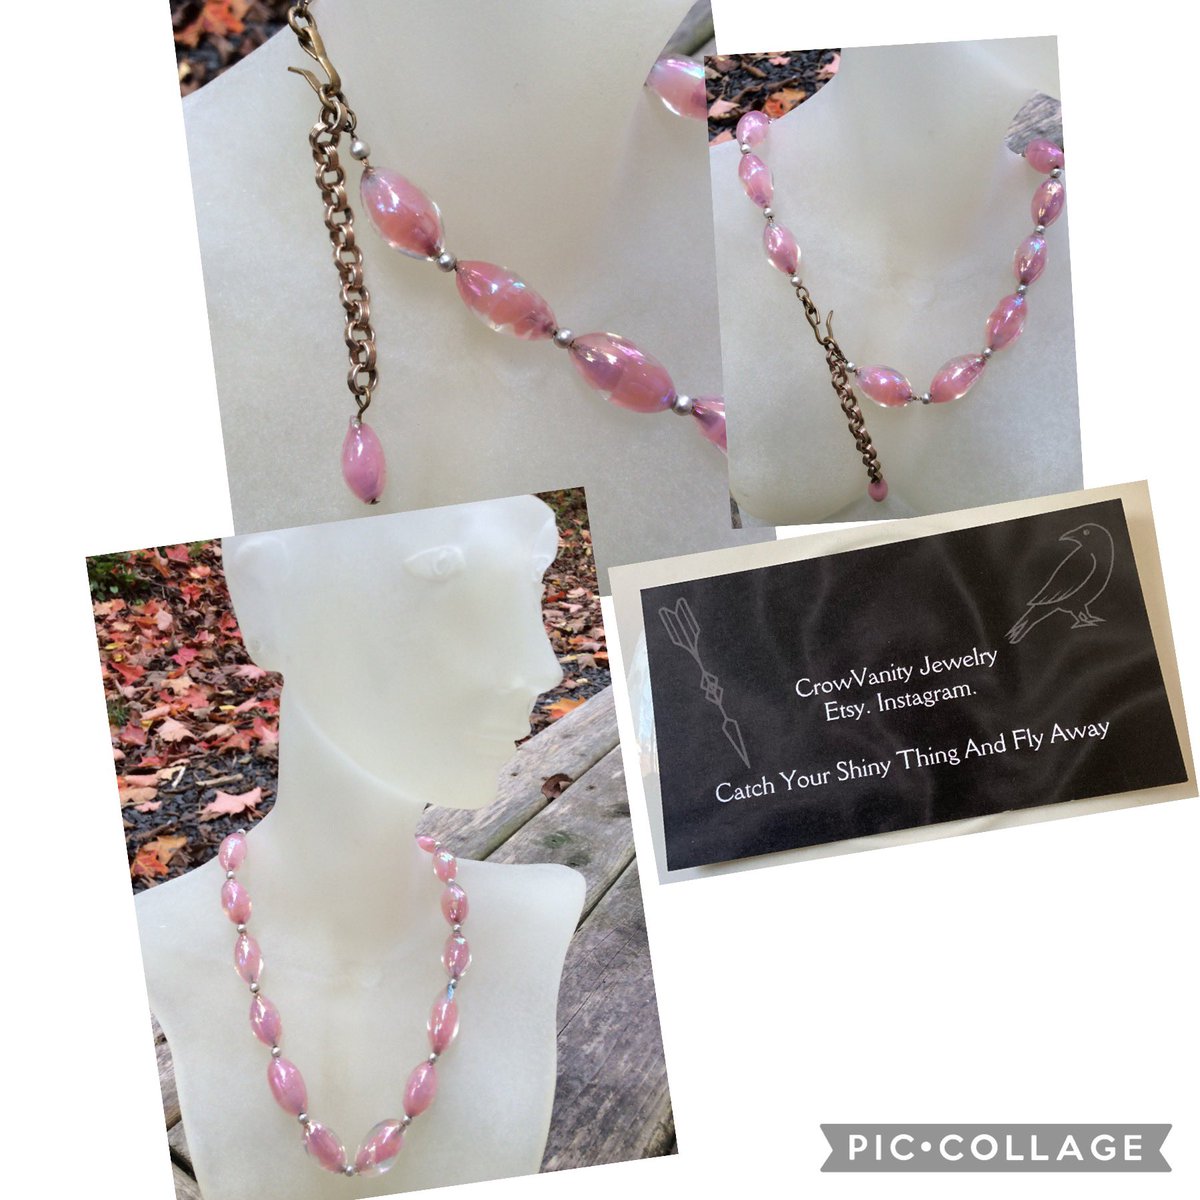 CA$65.00
Vintage glass beads #Minimalist #pinkglassbeads #beadednecklace #retroValentines #vintageBeads #vintagenecklace for sale by Crow Vanity Jewelry on Etsy #etsyaccessories #etsyvalentines #etsyjewelry #etsyvintageseller etsy.com/ca/listing/163…